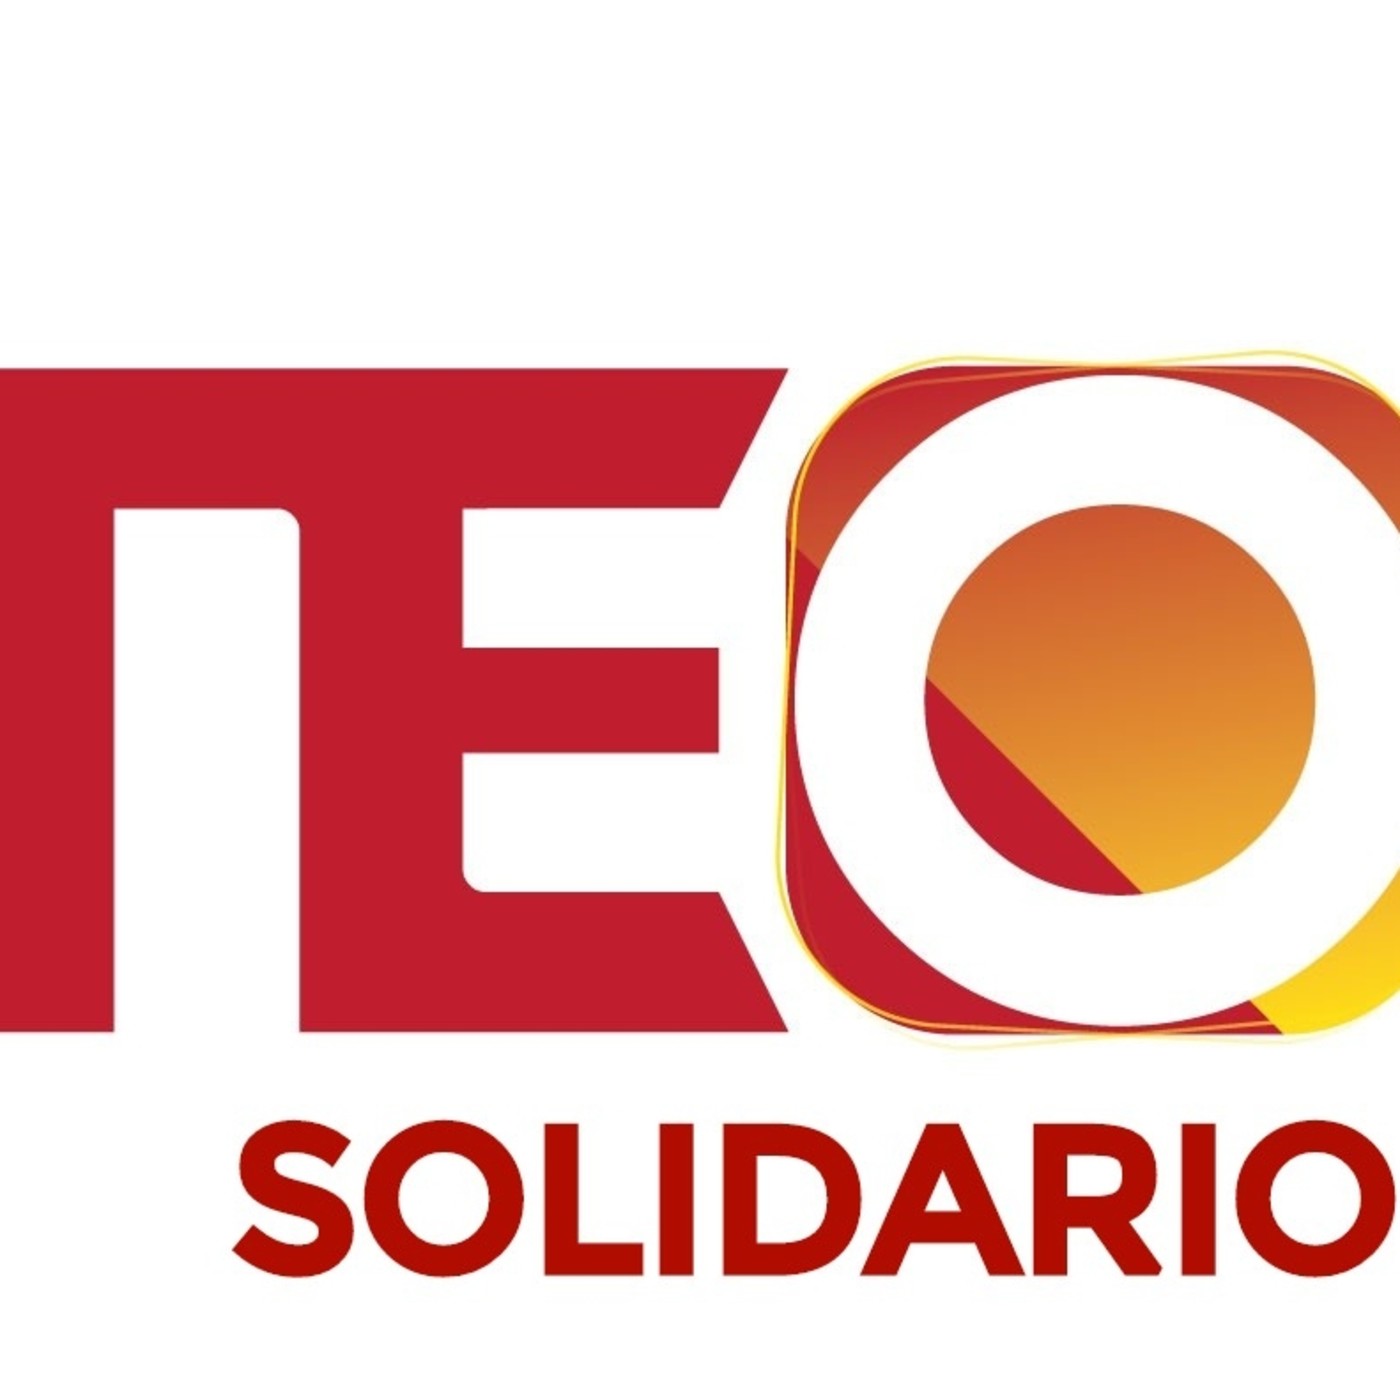 Neo FM solidario 16 - 11 - 2022 (Grupo Sonrisas)